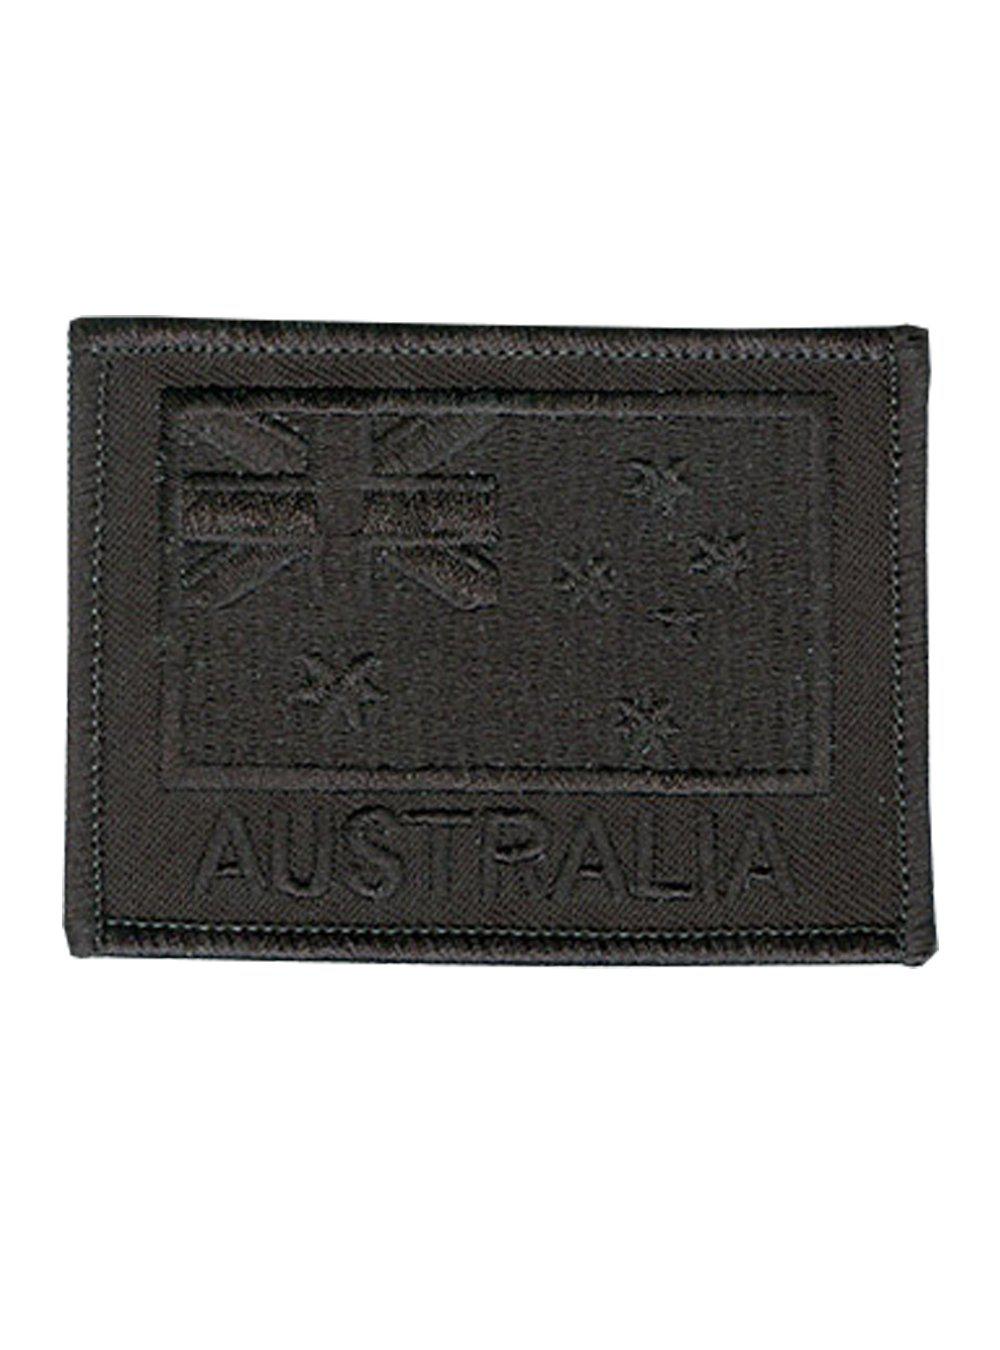 TacSource AUS Flag Patch - Black on Black - TacSource